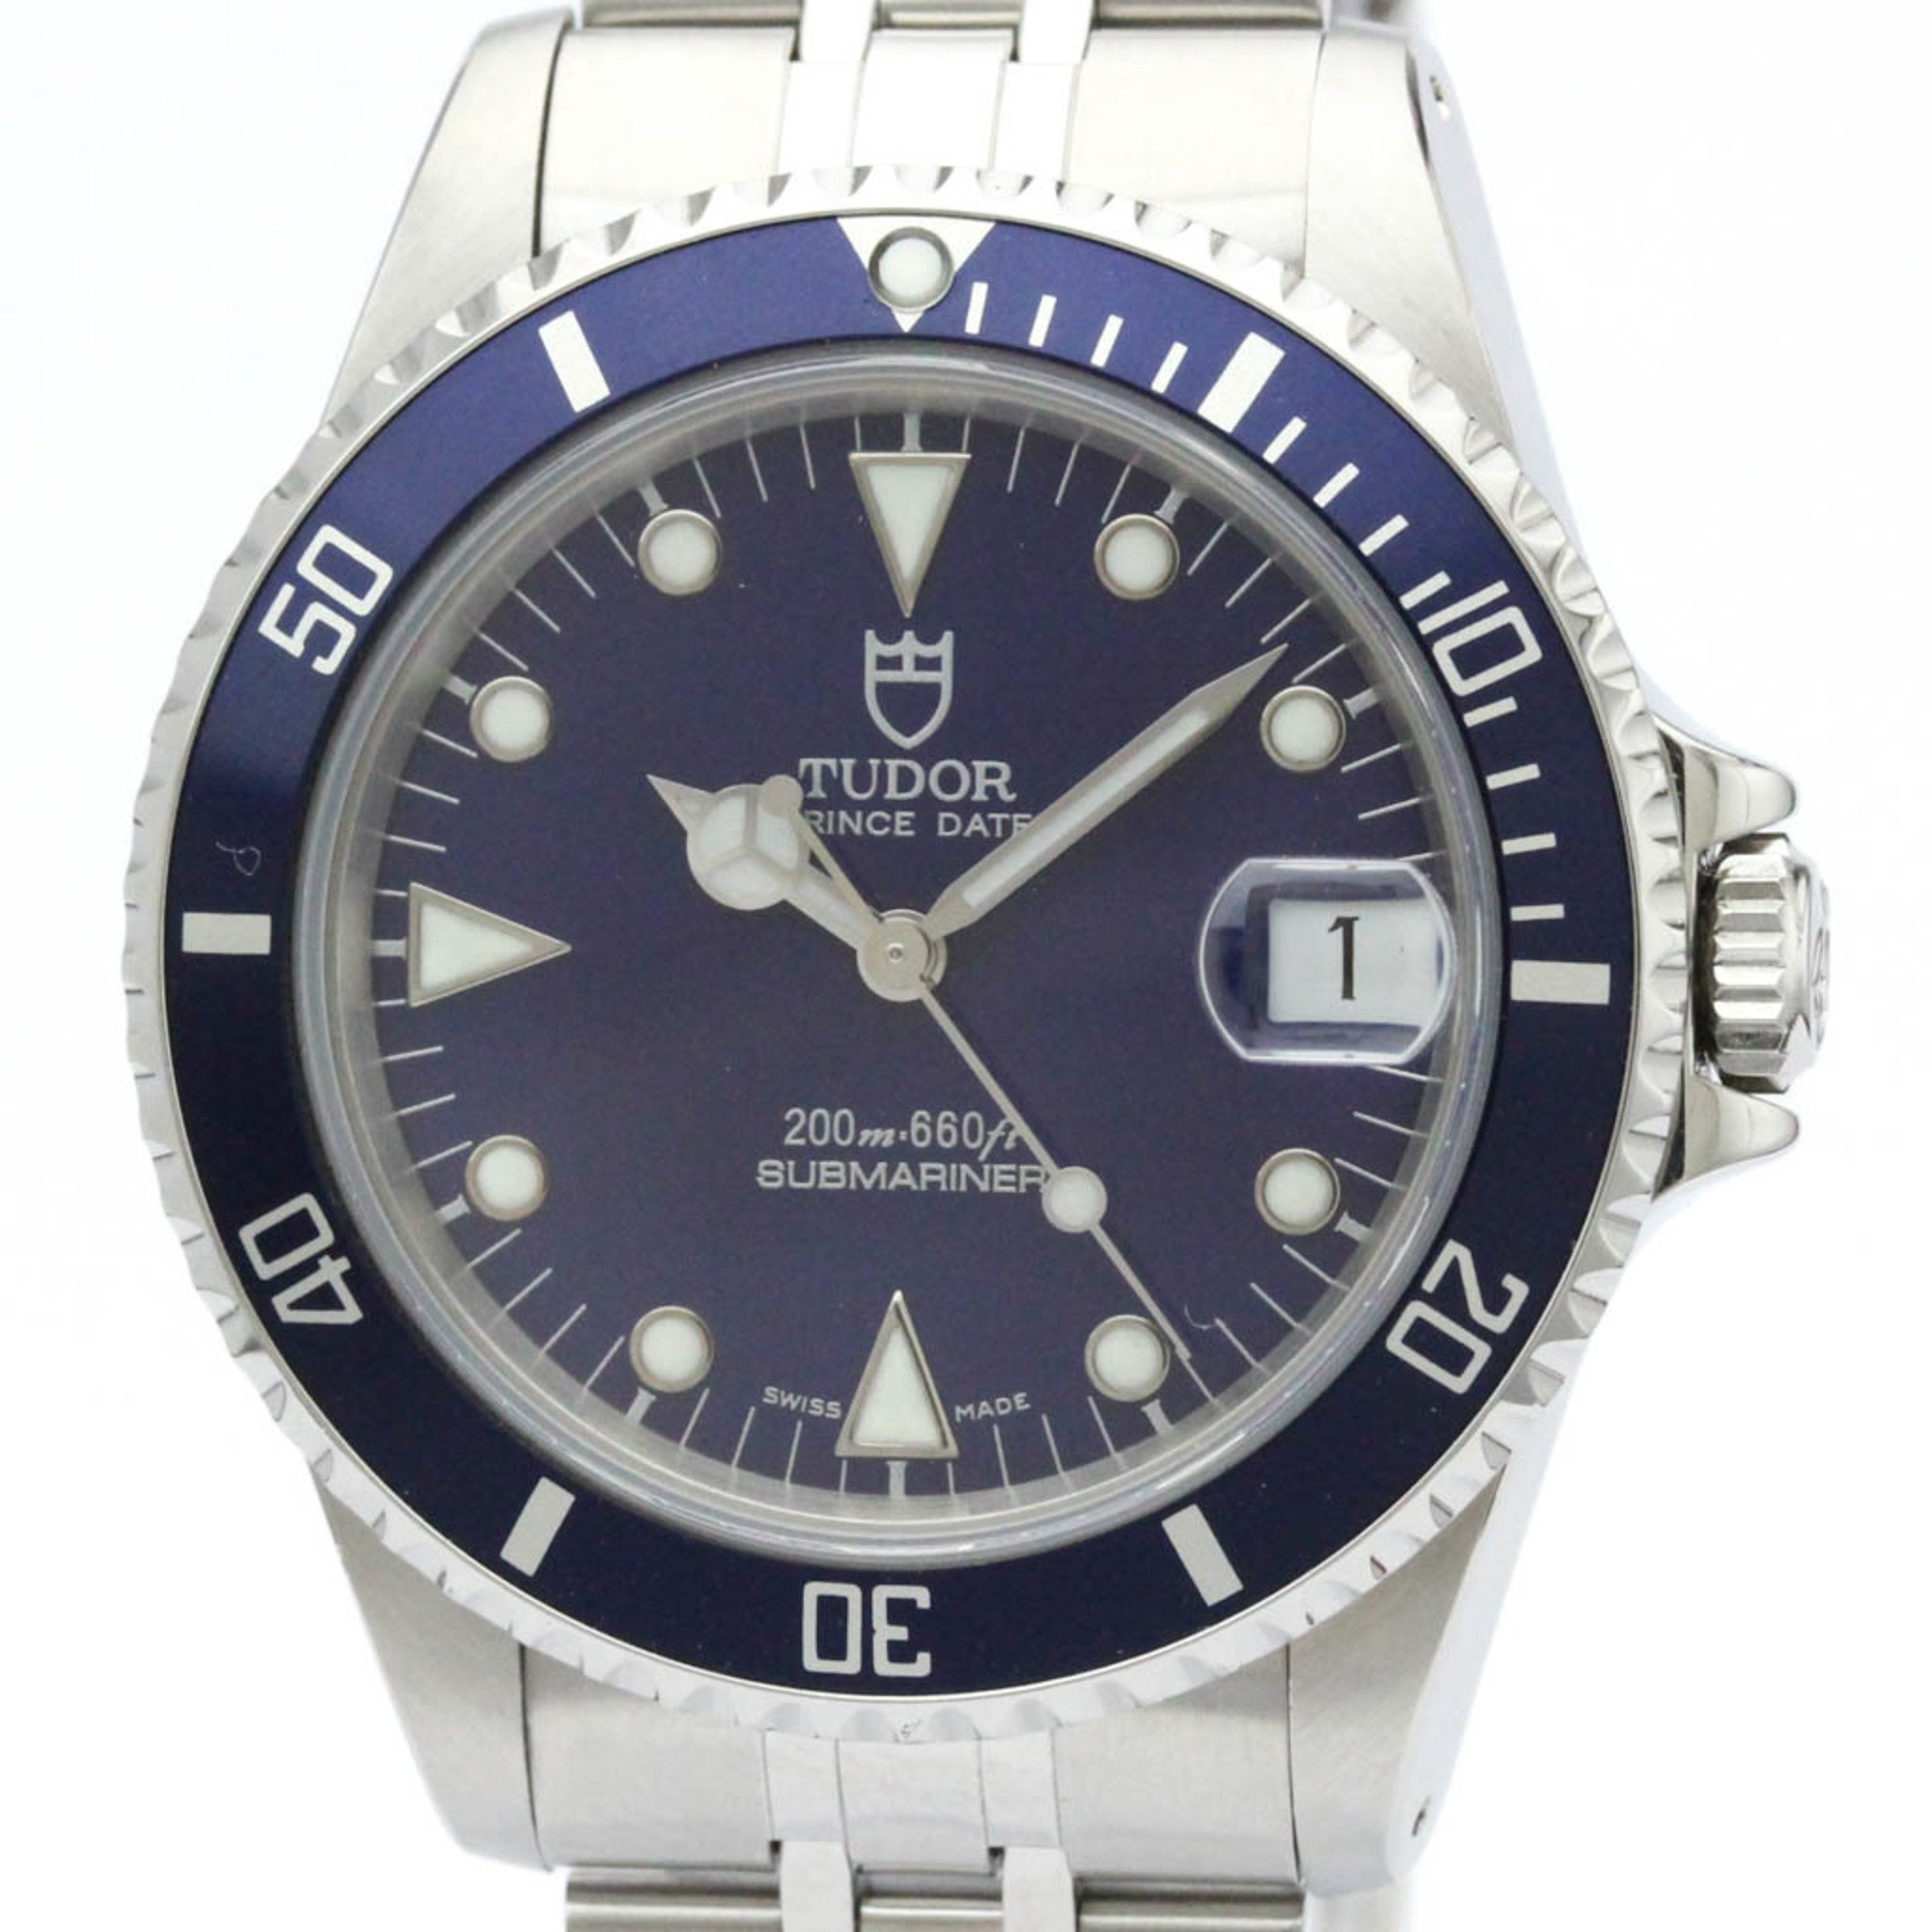 Polished TUDOR Rolex Submarina Steel Automatic Mens Watch 75190 BF547404